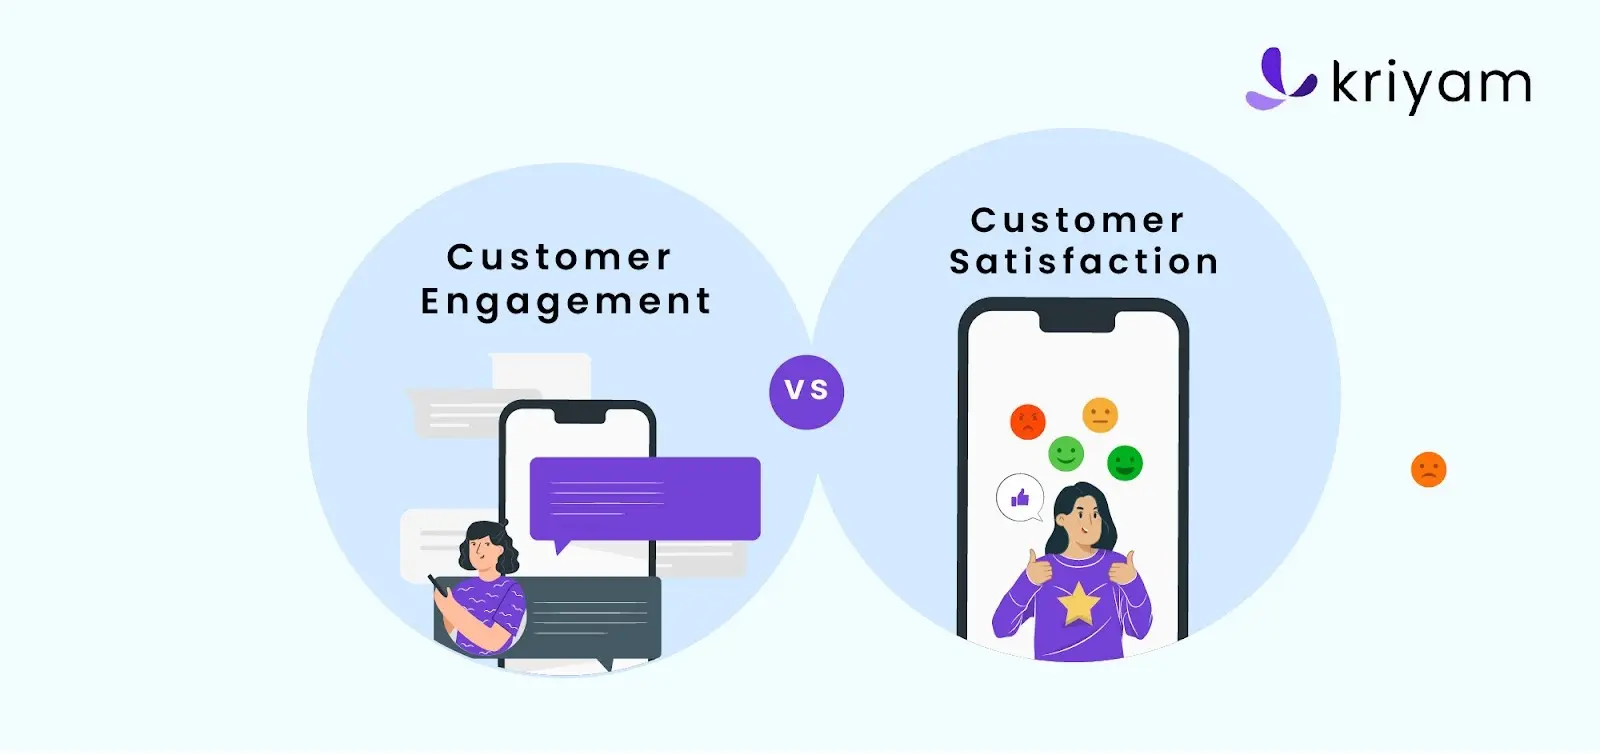  Enhancing Customer Engagement and Satisfaction